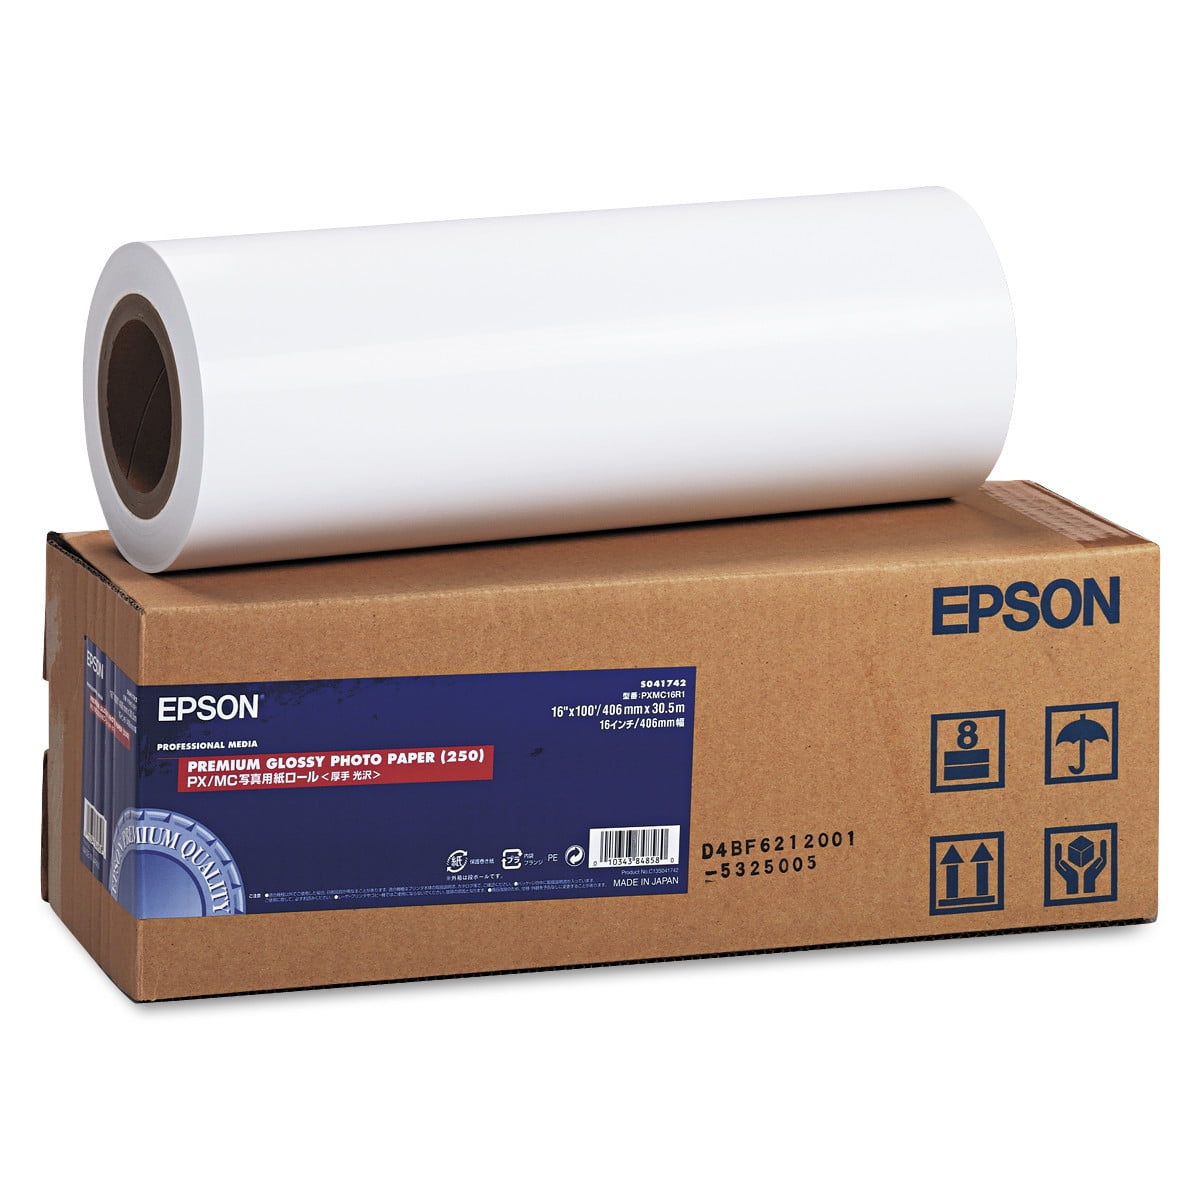 Epson Premium Glossy Photo Paper Rolls, 16 x 100 ft, Roll